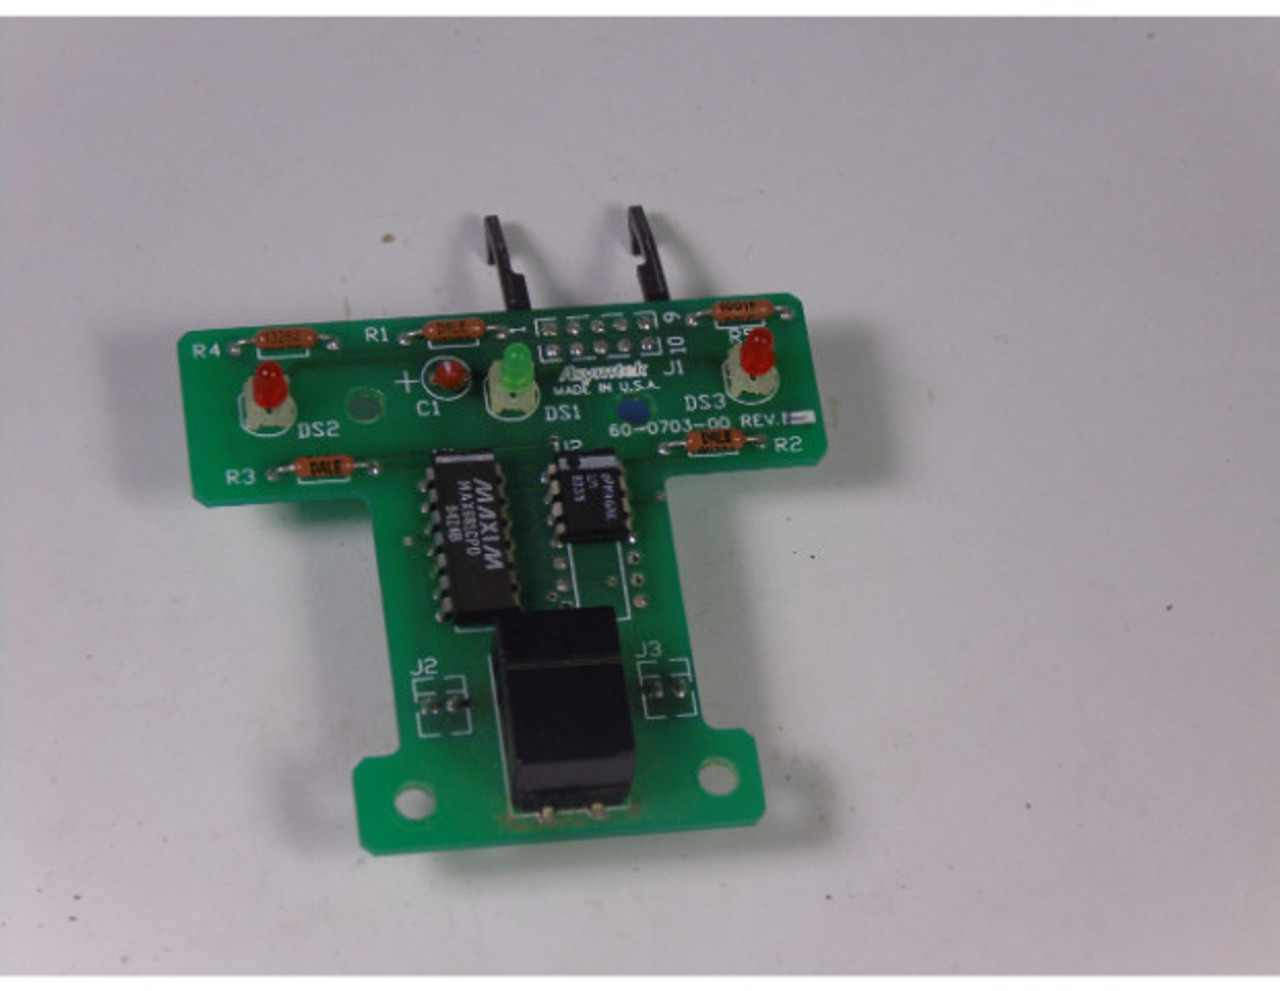 Asymtek 60-0703-00 Circuit Board W/ Button USED